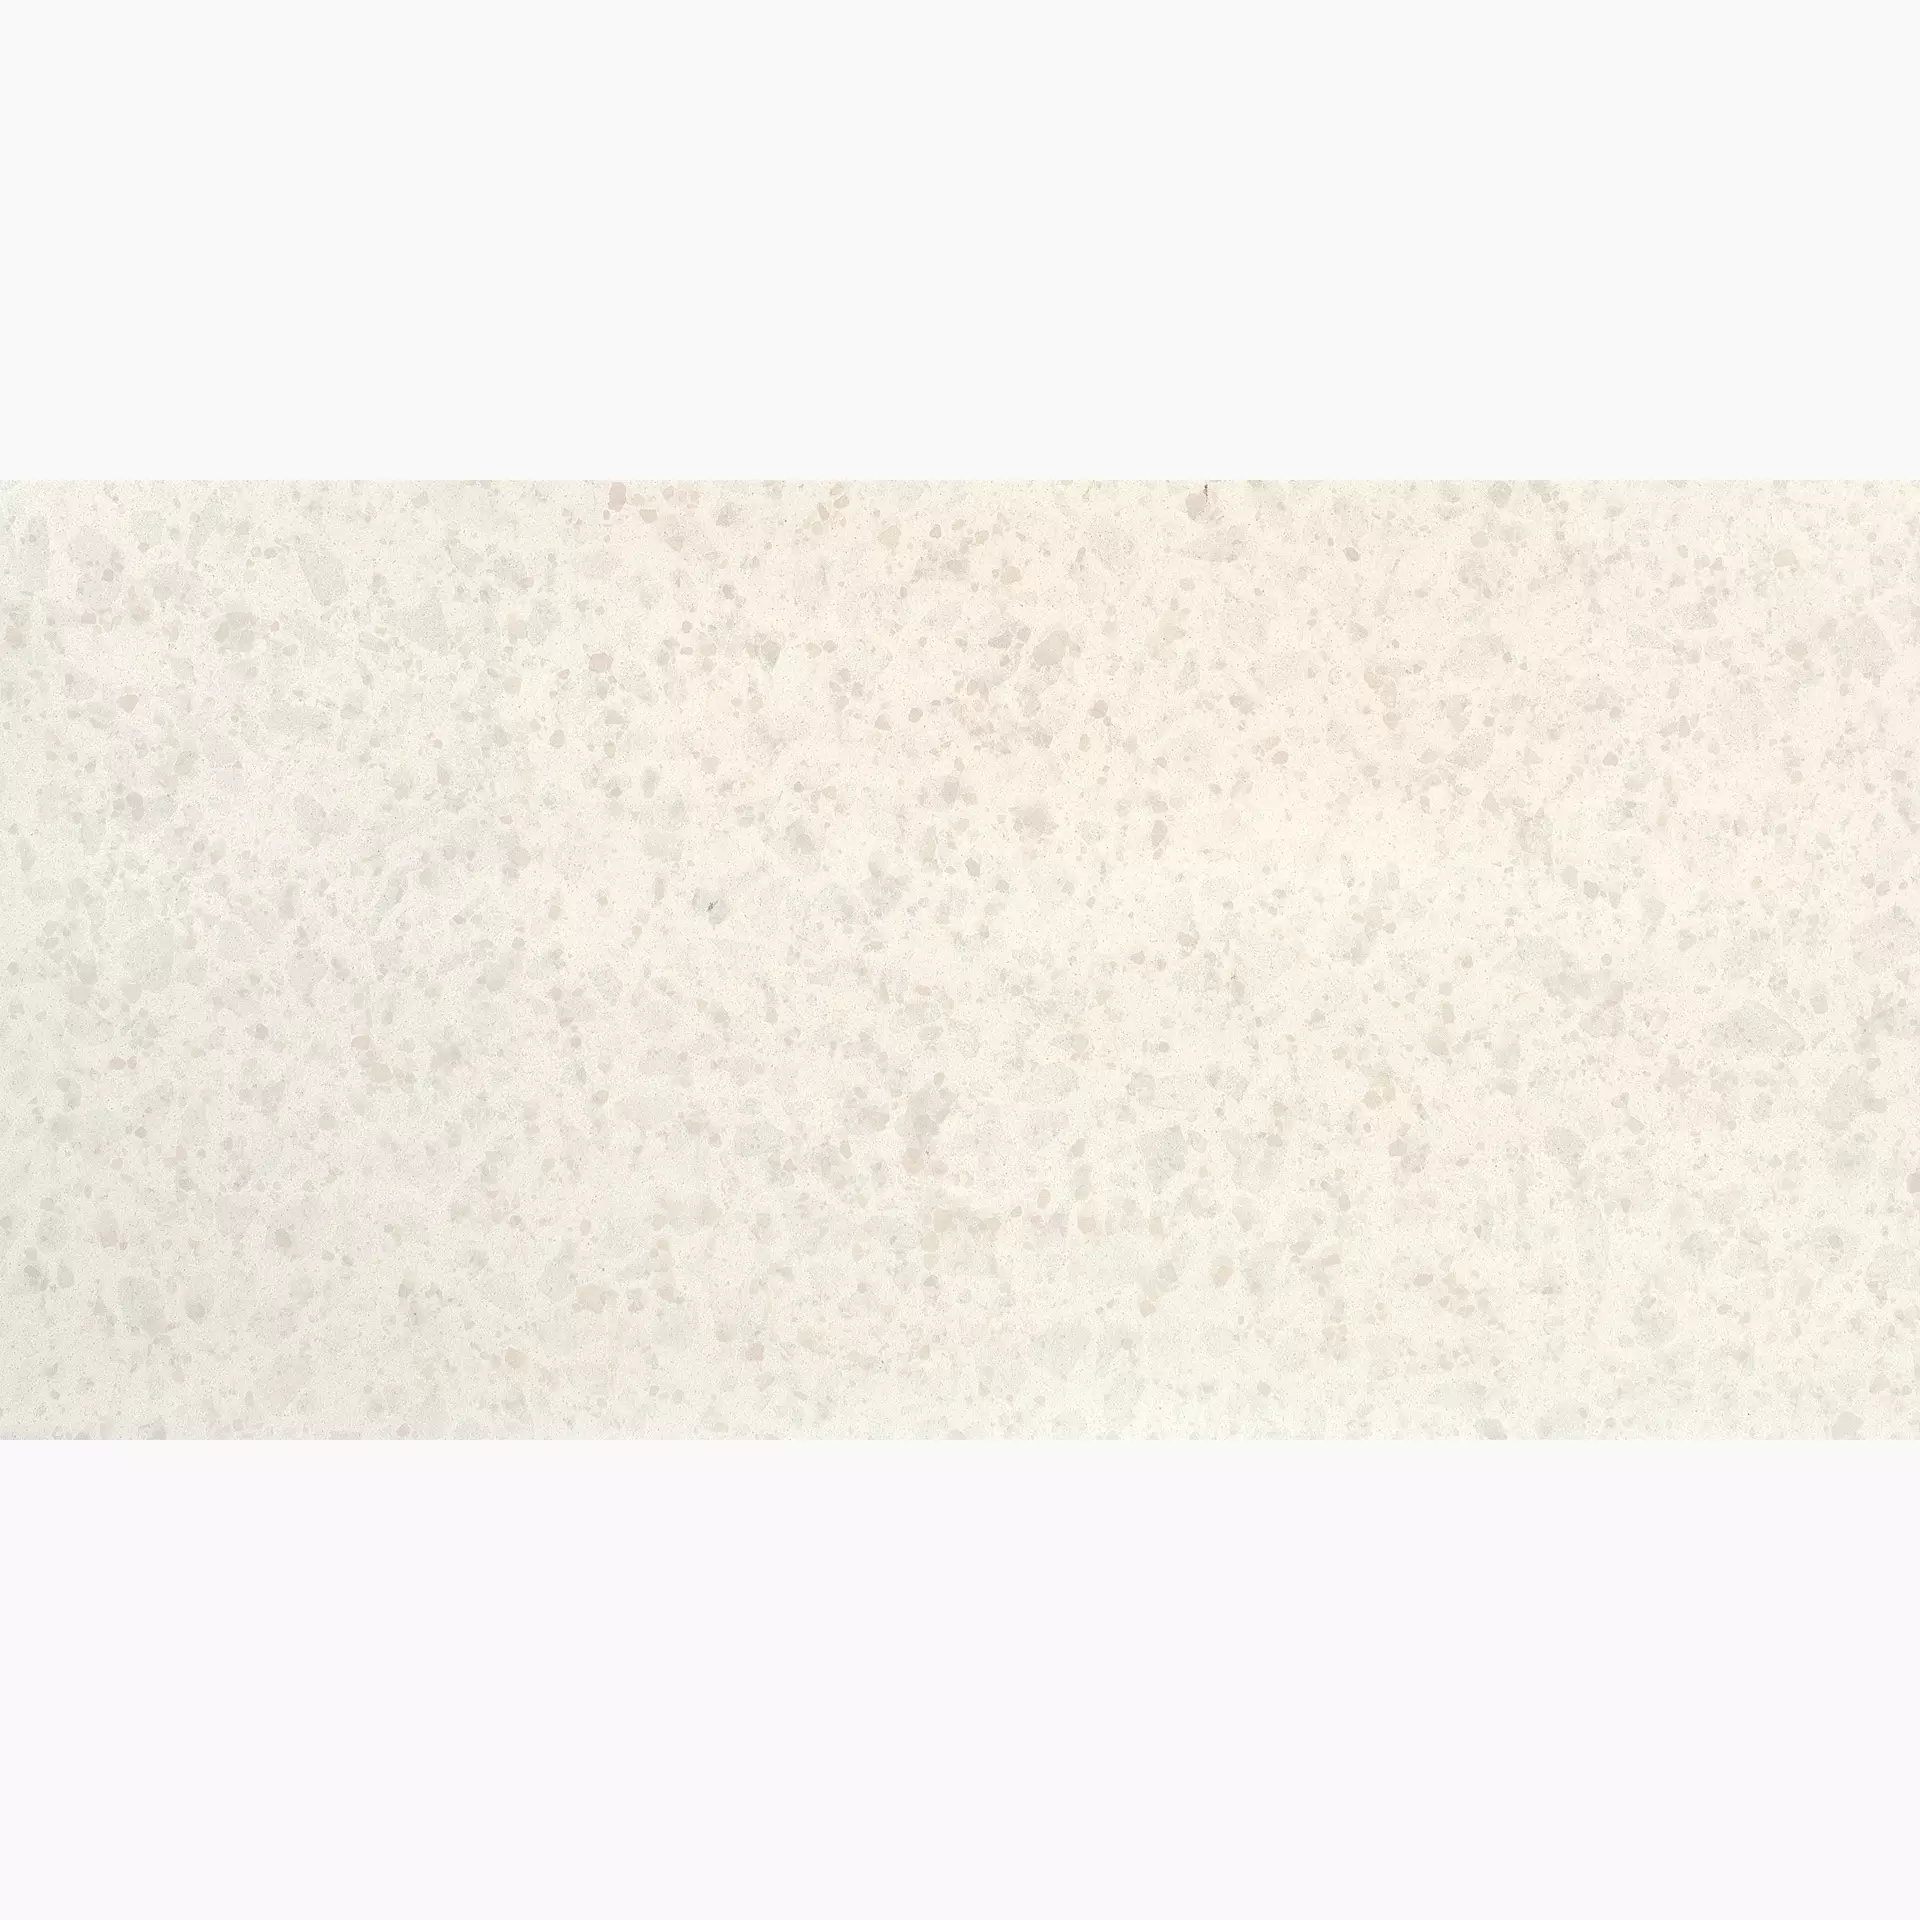 Gigacer Inclusioni Soave Bianco Perla Matt Bianco Perla 12INCL60120BIAPERMAT matt 60x120cm 12mm